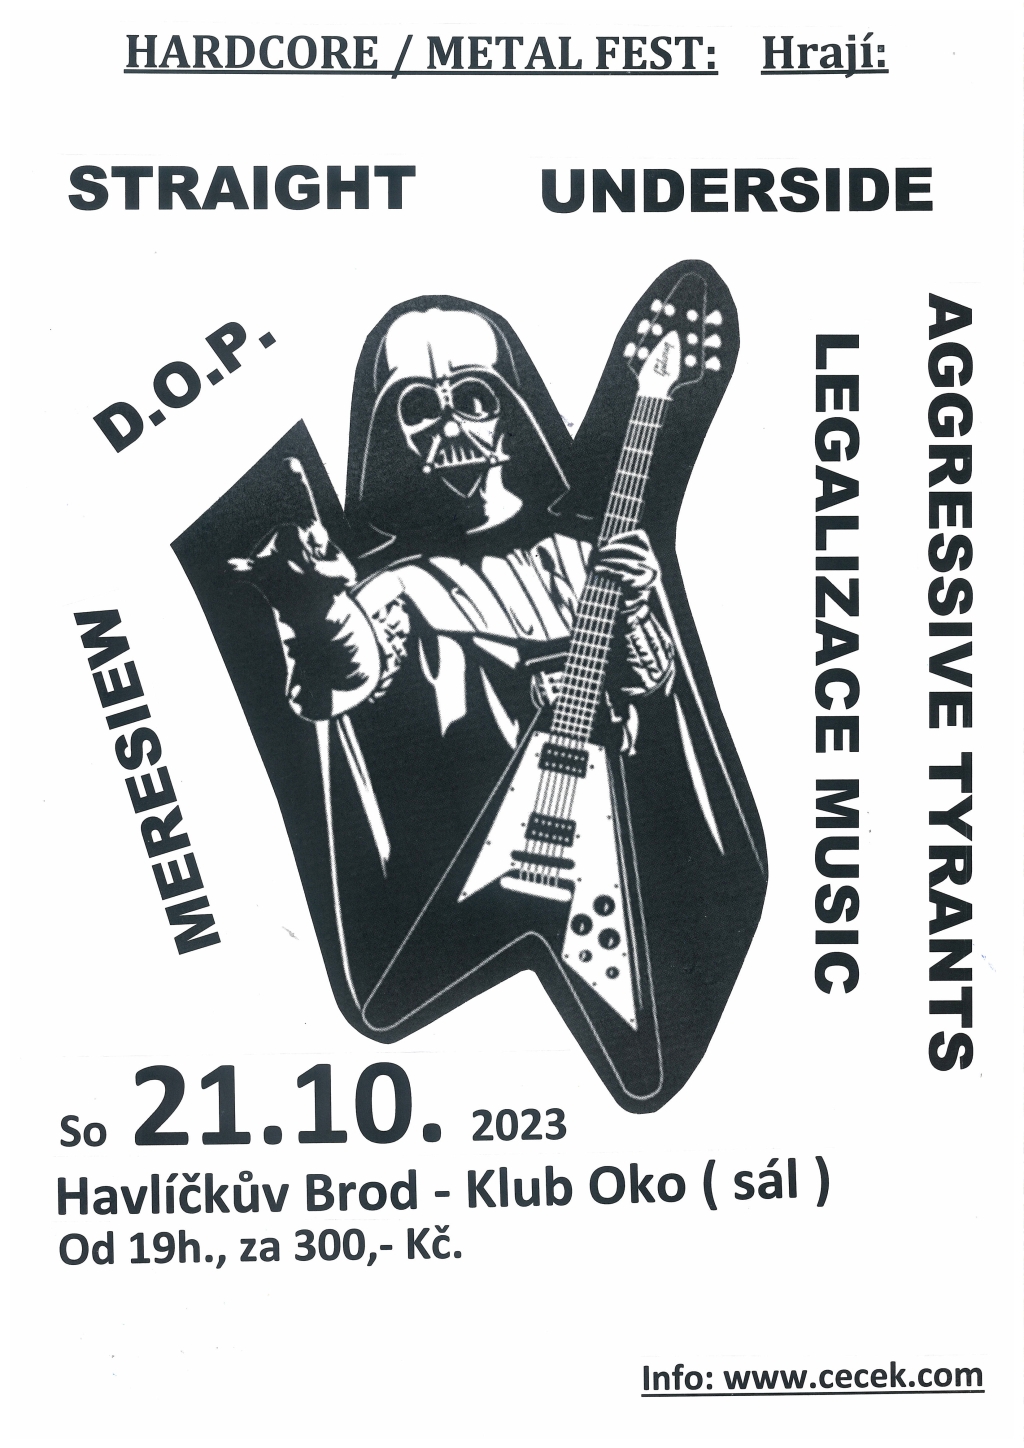 HC / Metal Fest: Havlíčkův Brod - Oko klub